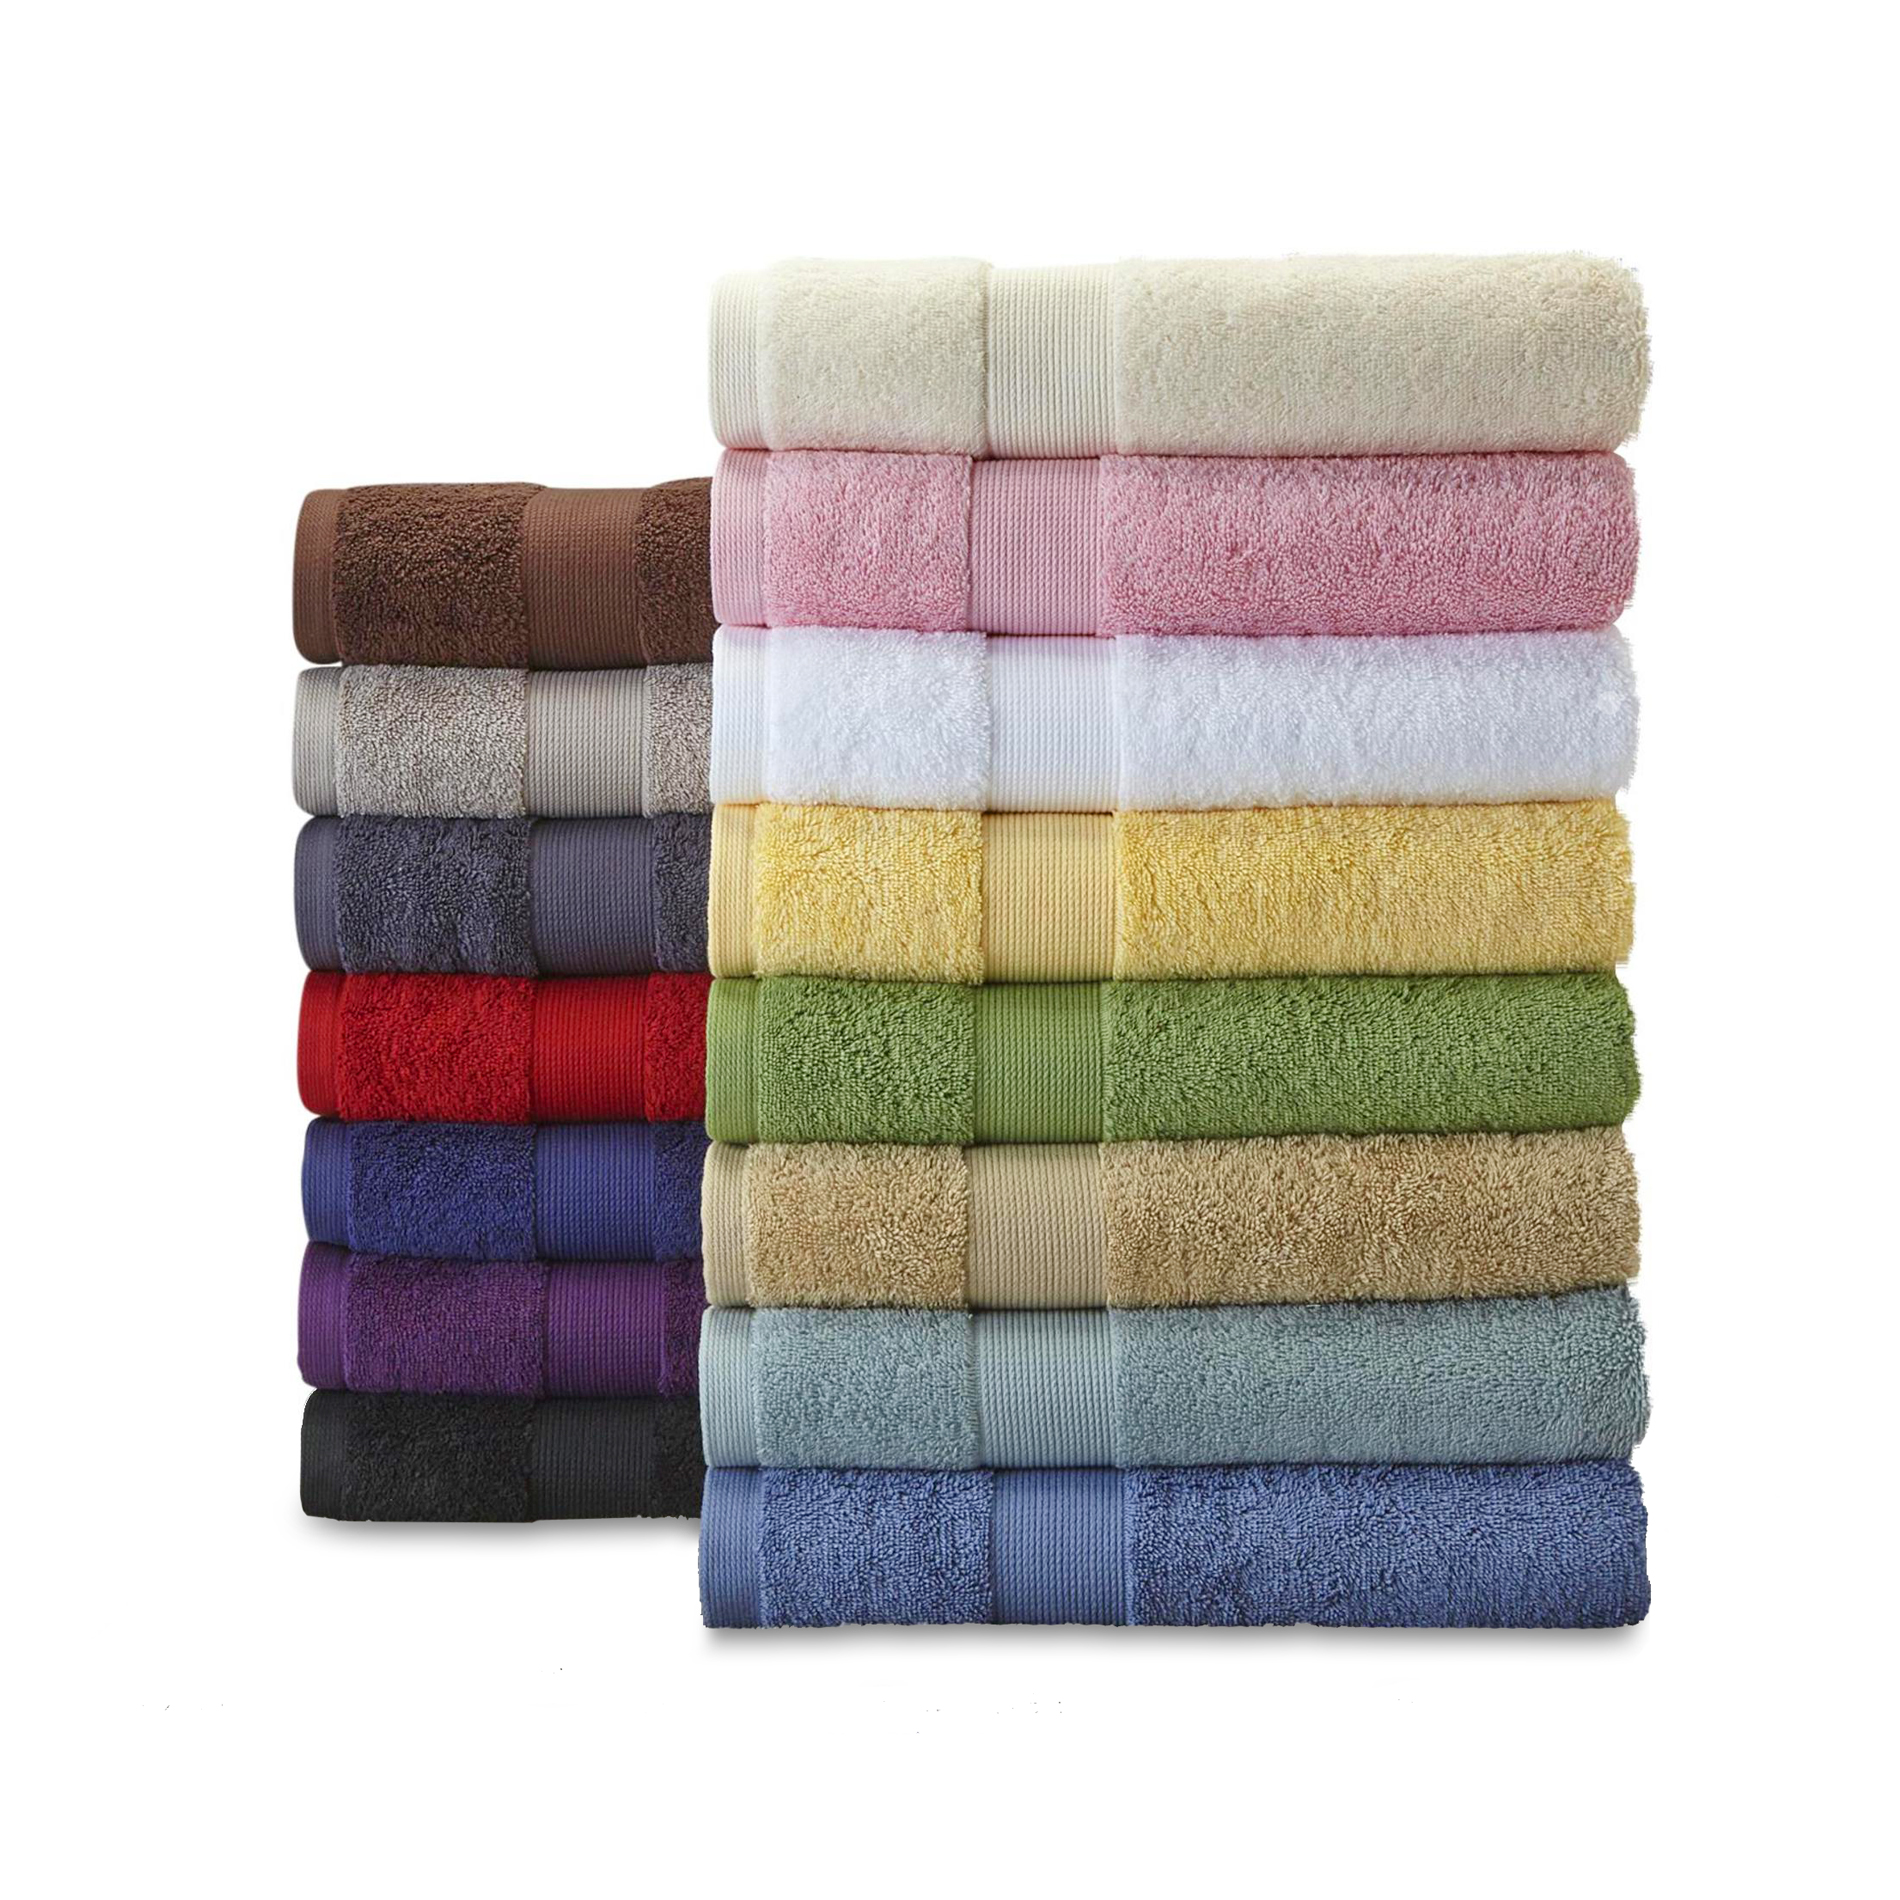 Cannon Bleach Friendly Cotton Bath Towels Hand Towels or Washcloths